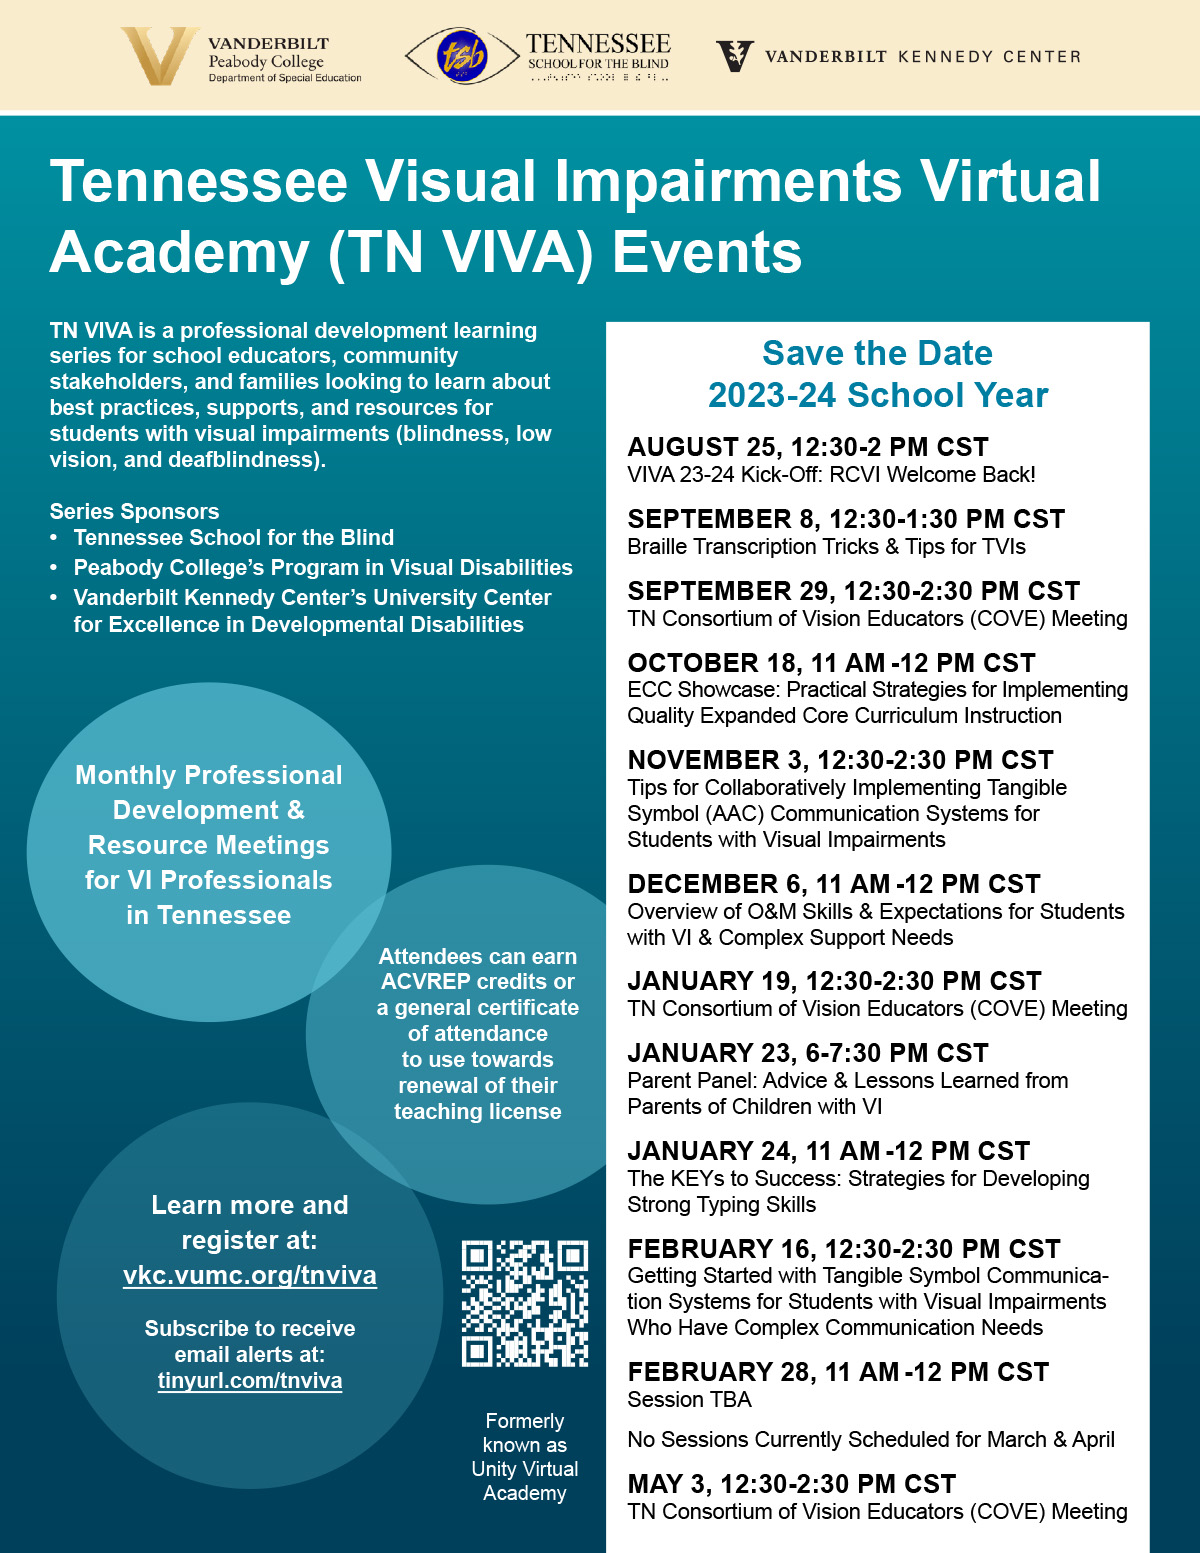 Tennessee Visual Impairments Virtual Academy - Webinar Series